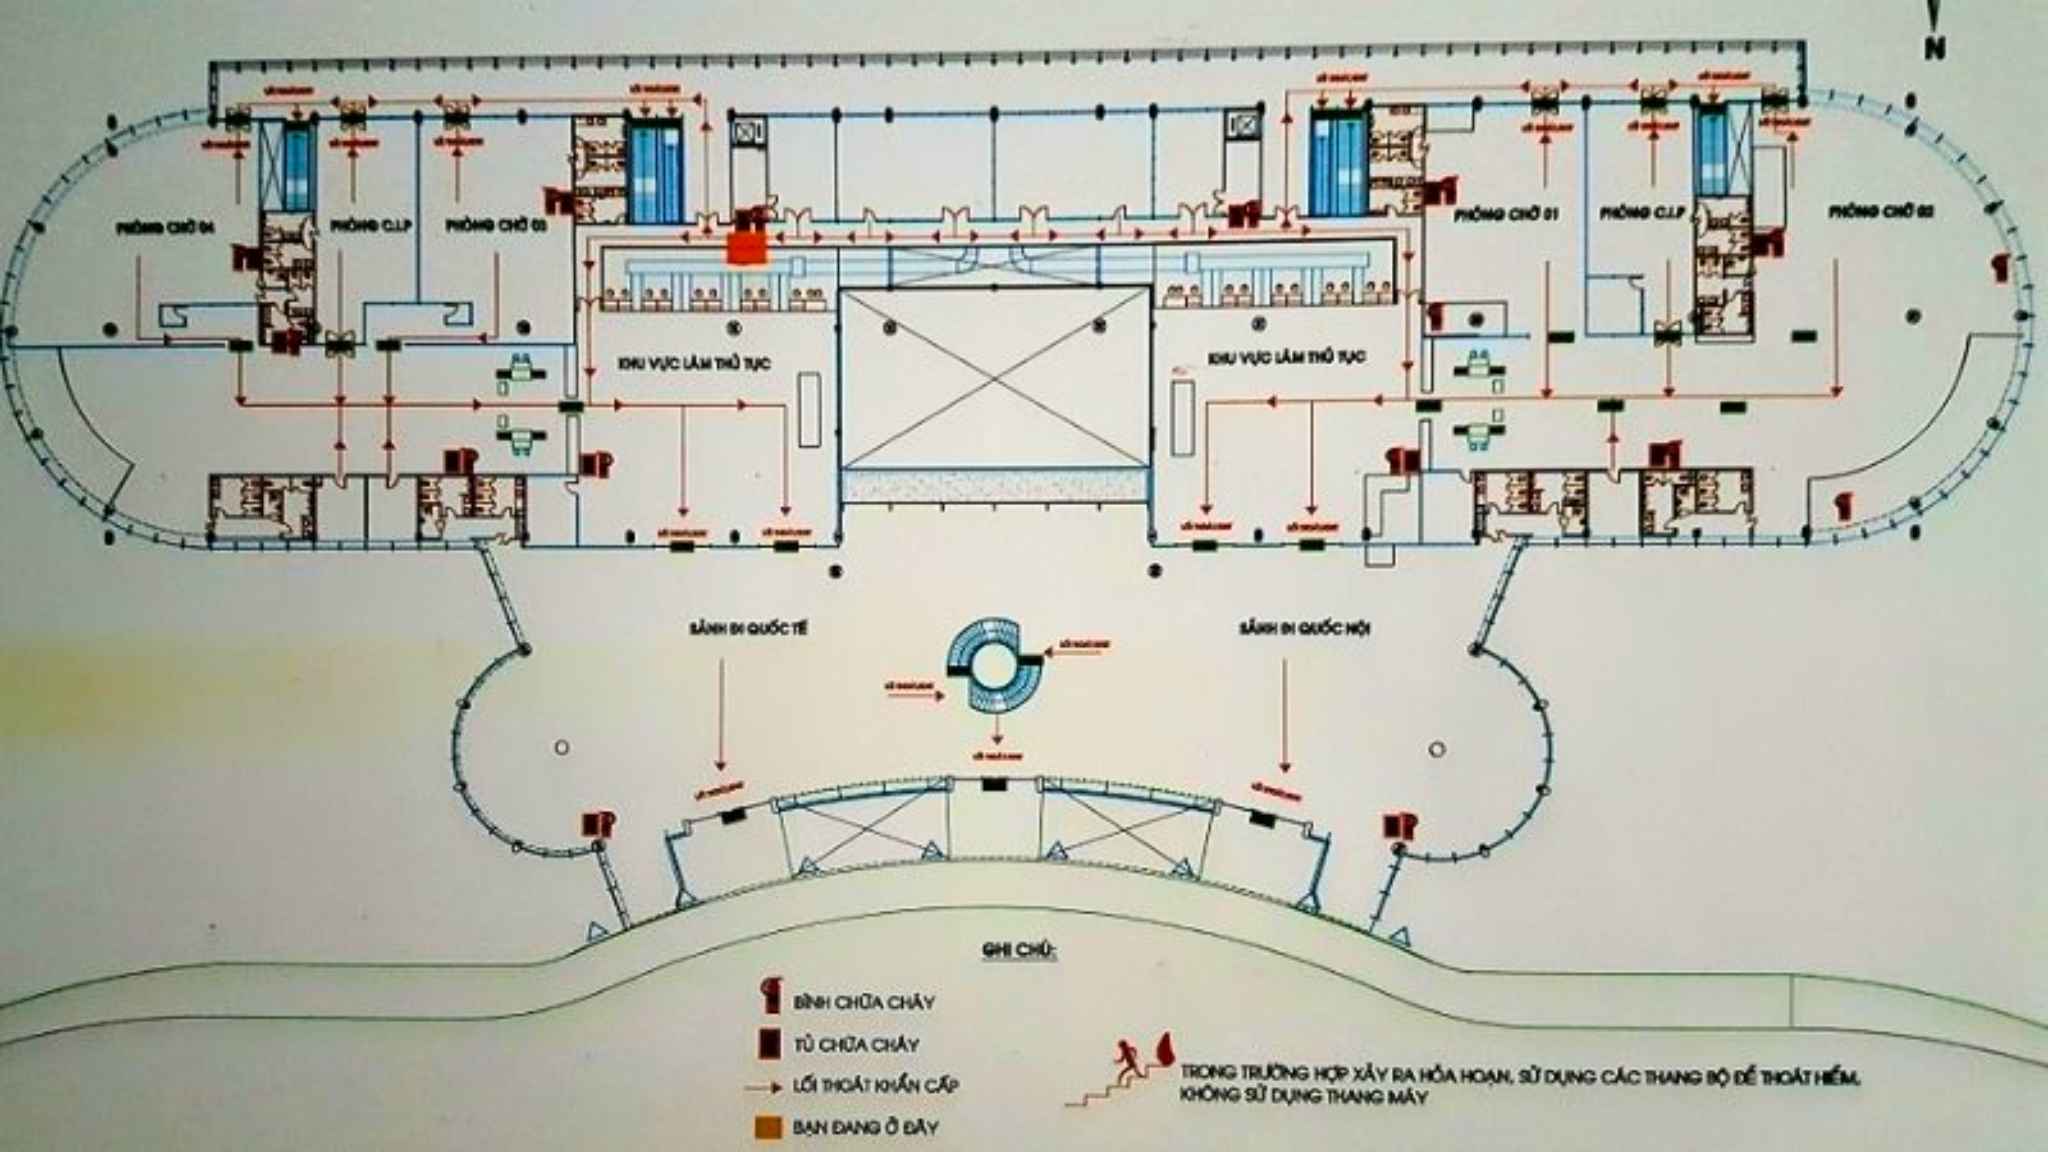 Dalat Airport Structure